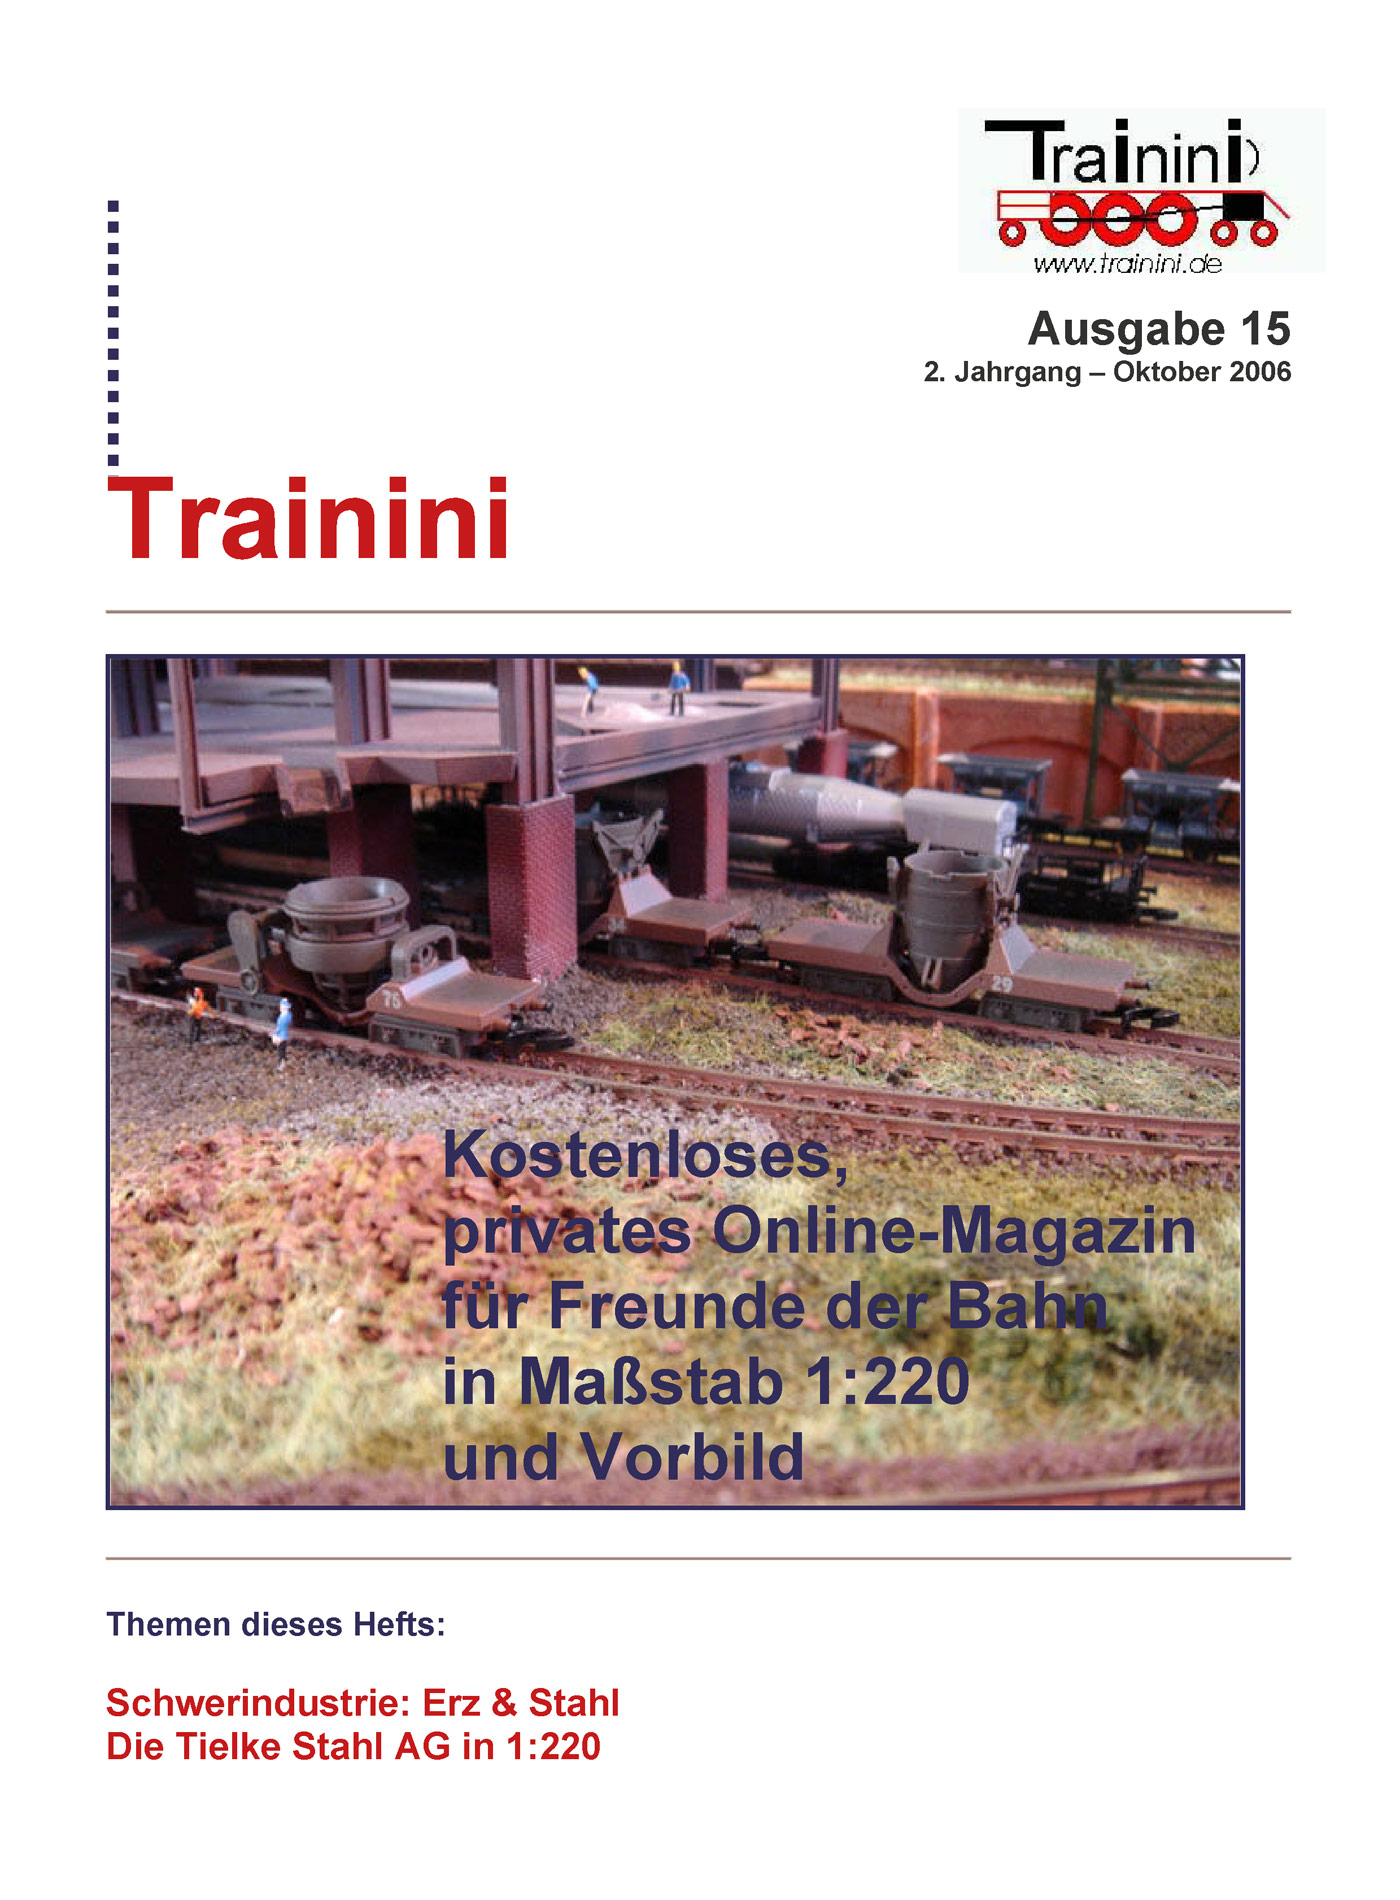 Trainini Ausgabe Oktober 2006